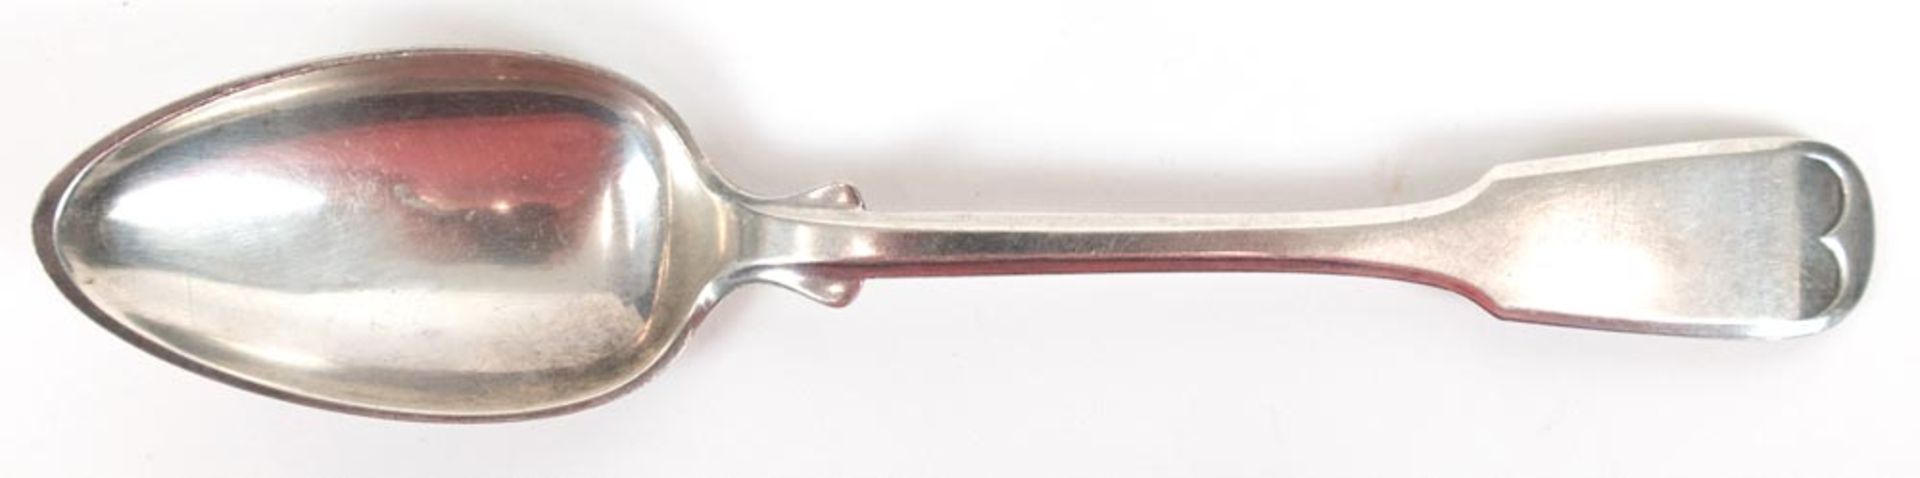 Eßlöffel, BMF 19. Jh., Silber, punziert, ca. 58 g, Spatenmuster